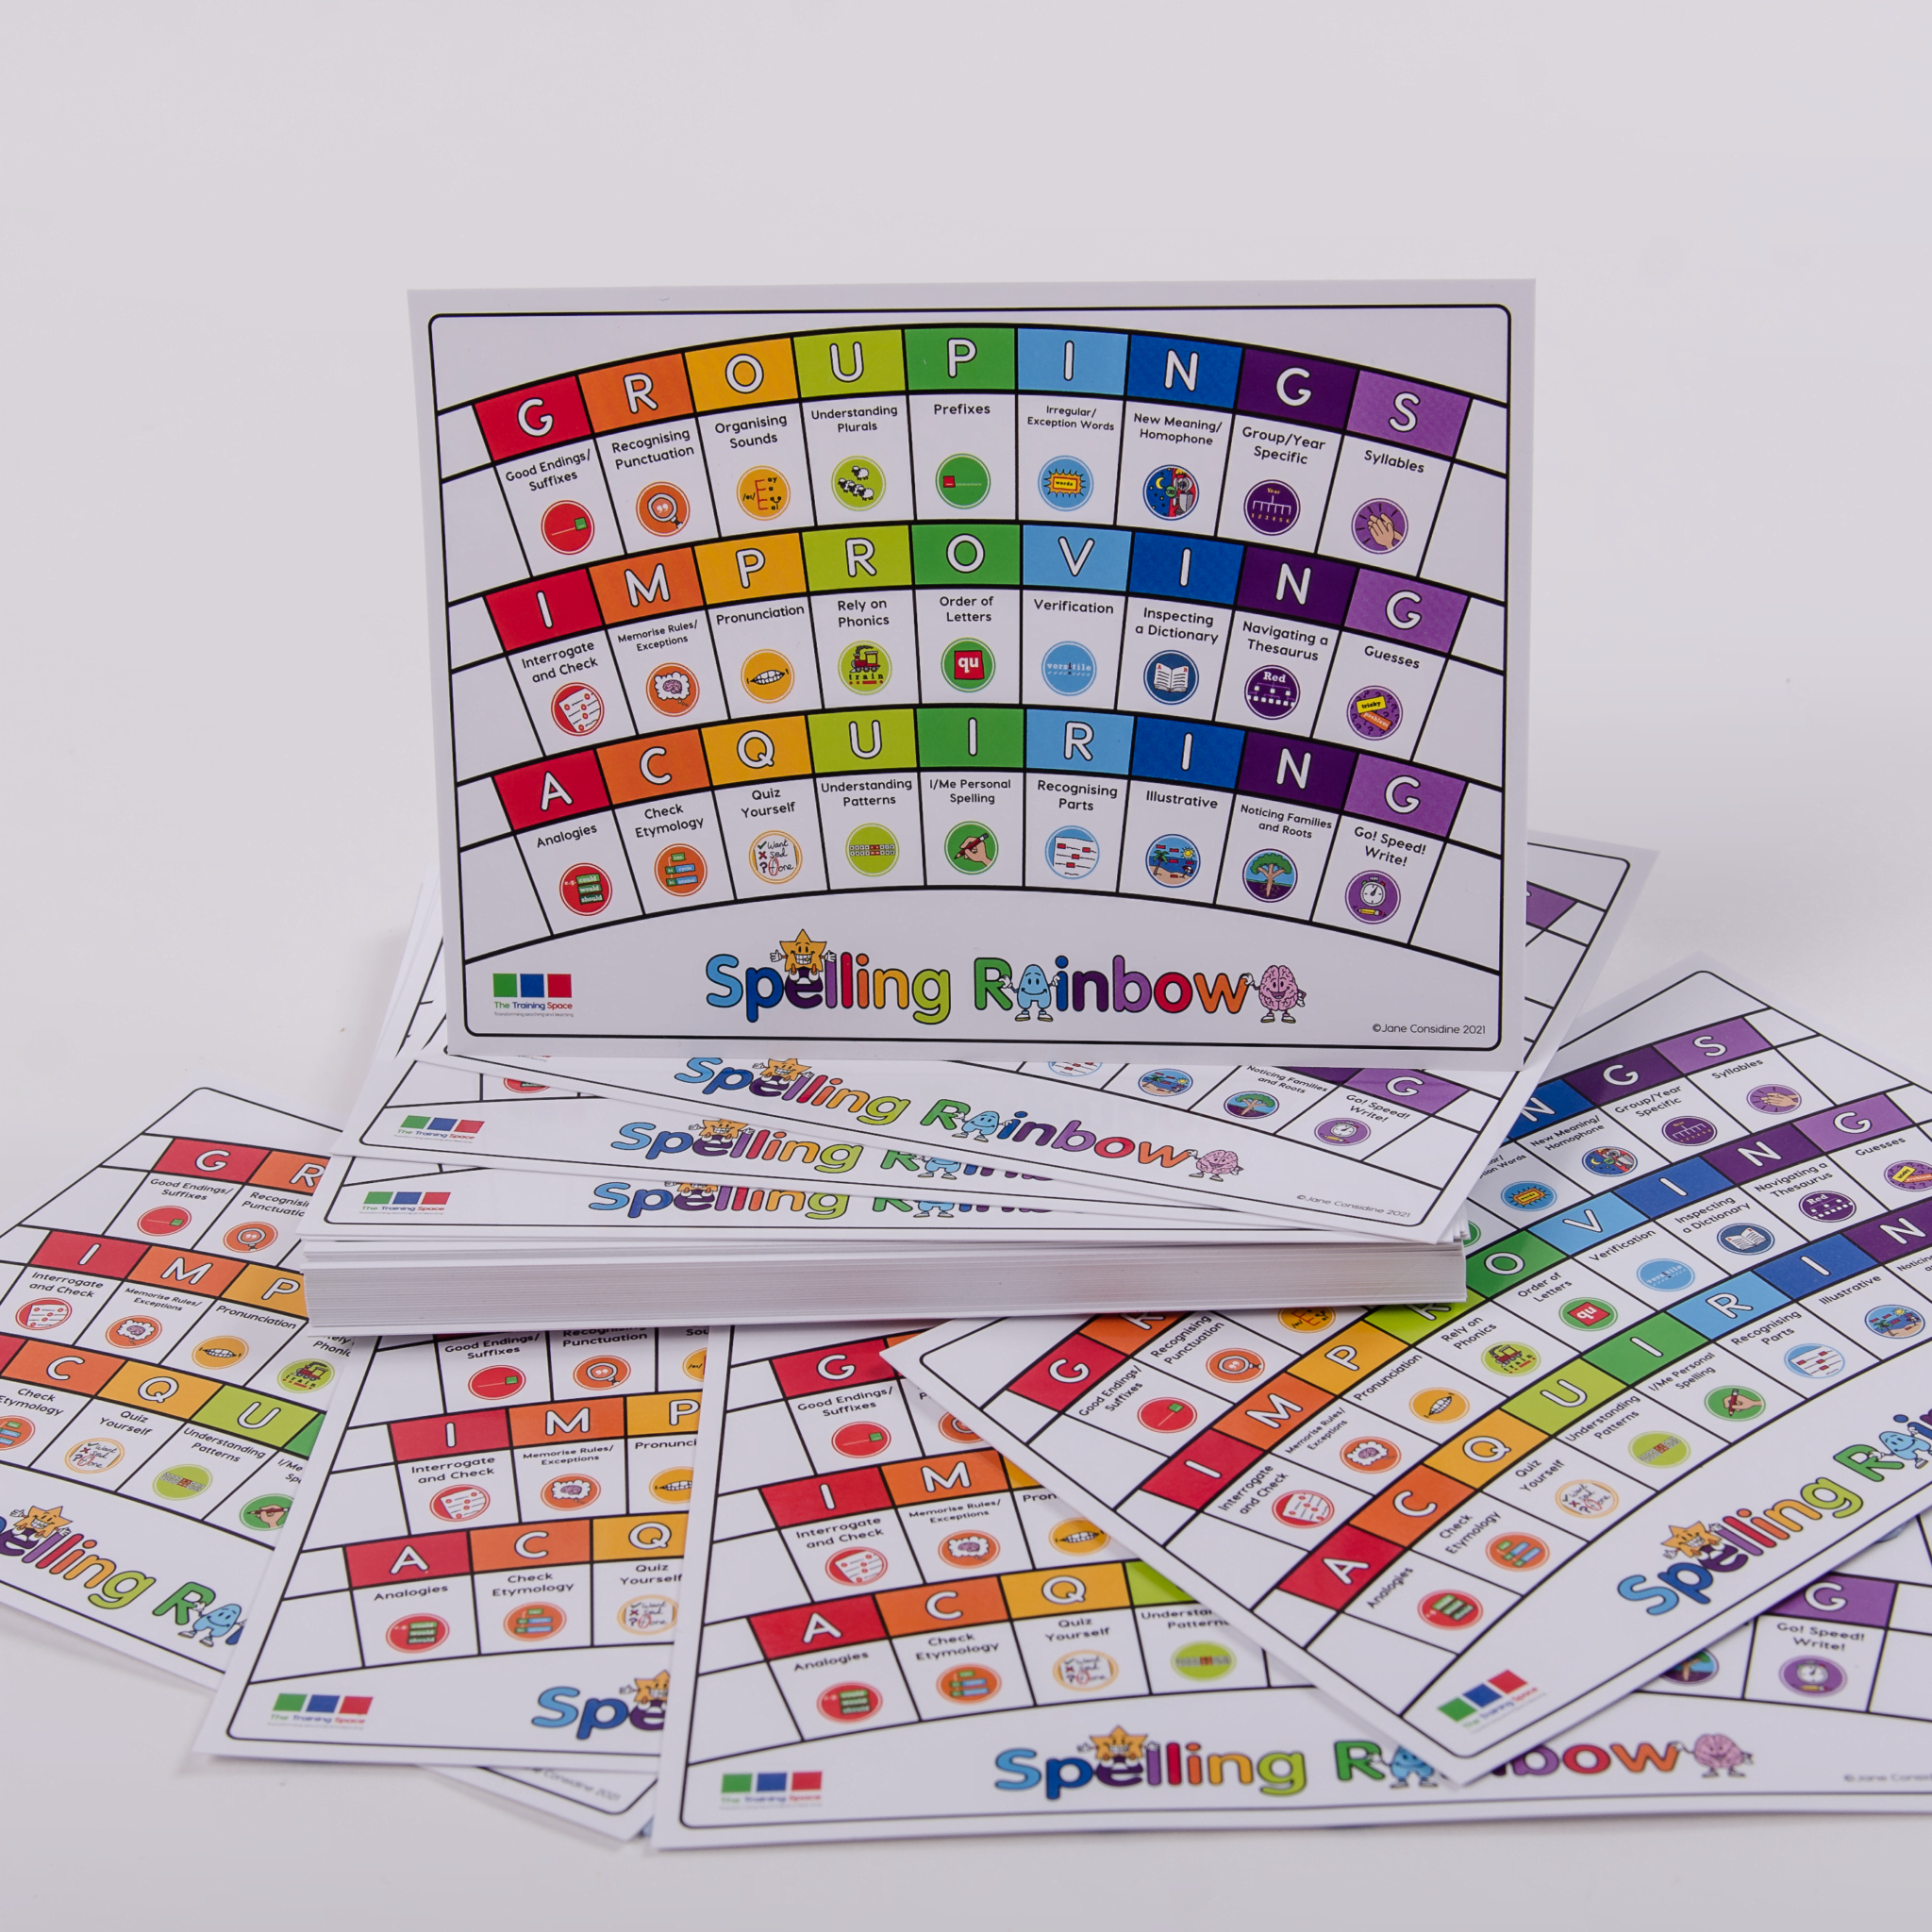 Spelling Rainbow class packs